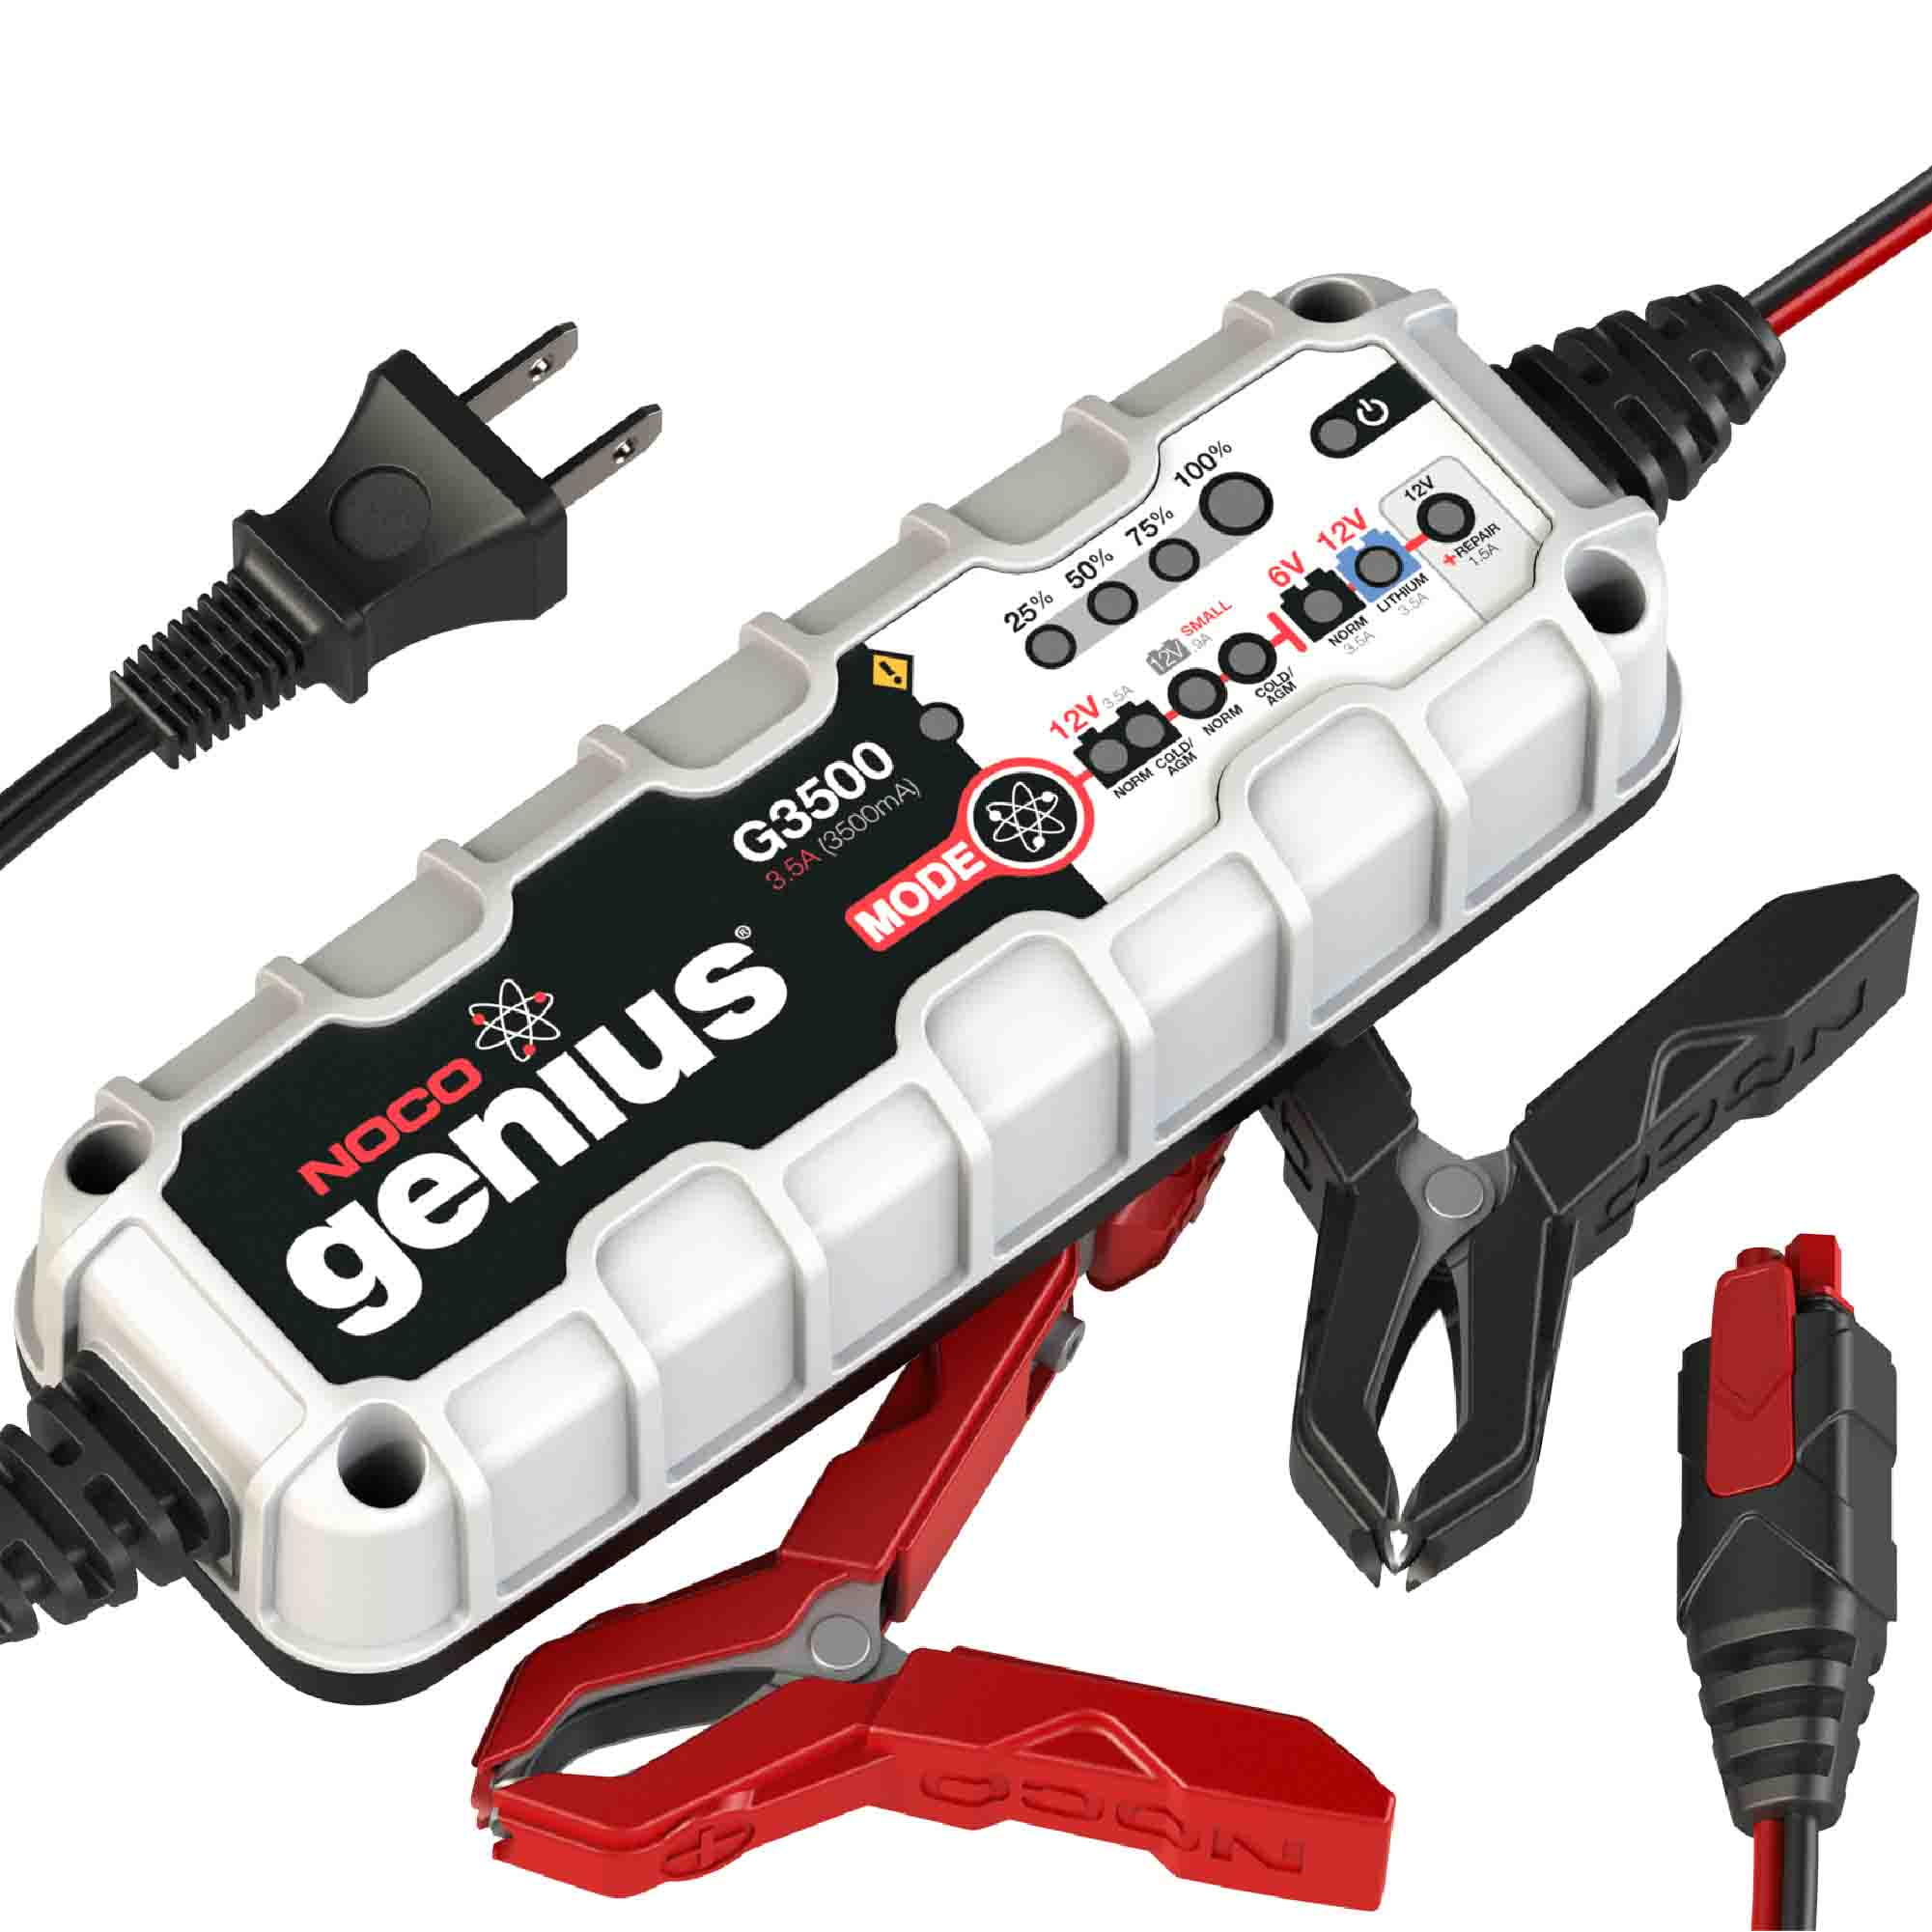 NOCO GENIUS 5UK 6V/12V 5-Amp Fully Automatic Smart Battery Charger -  GoBatteries